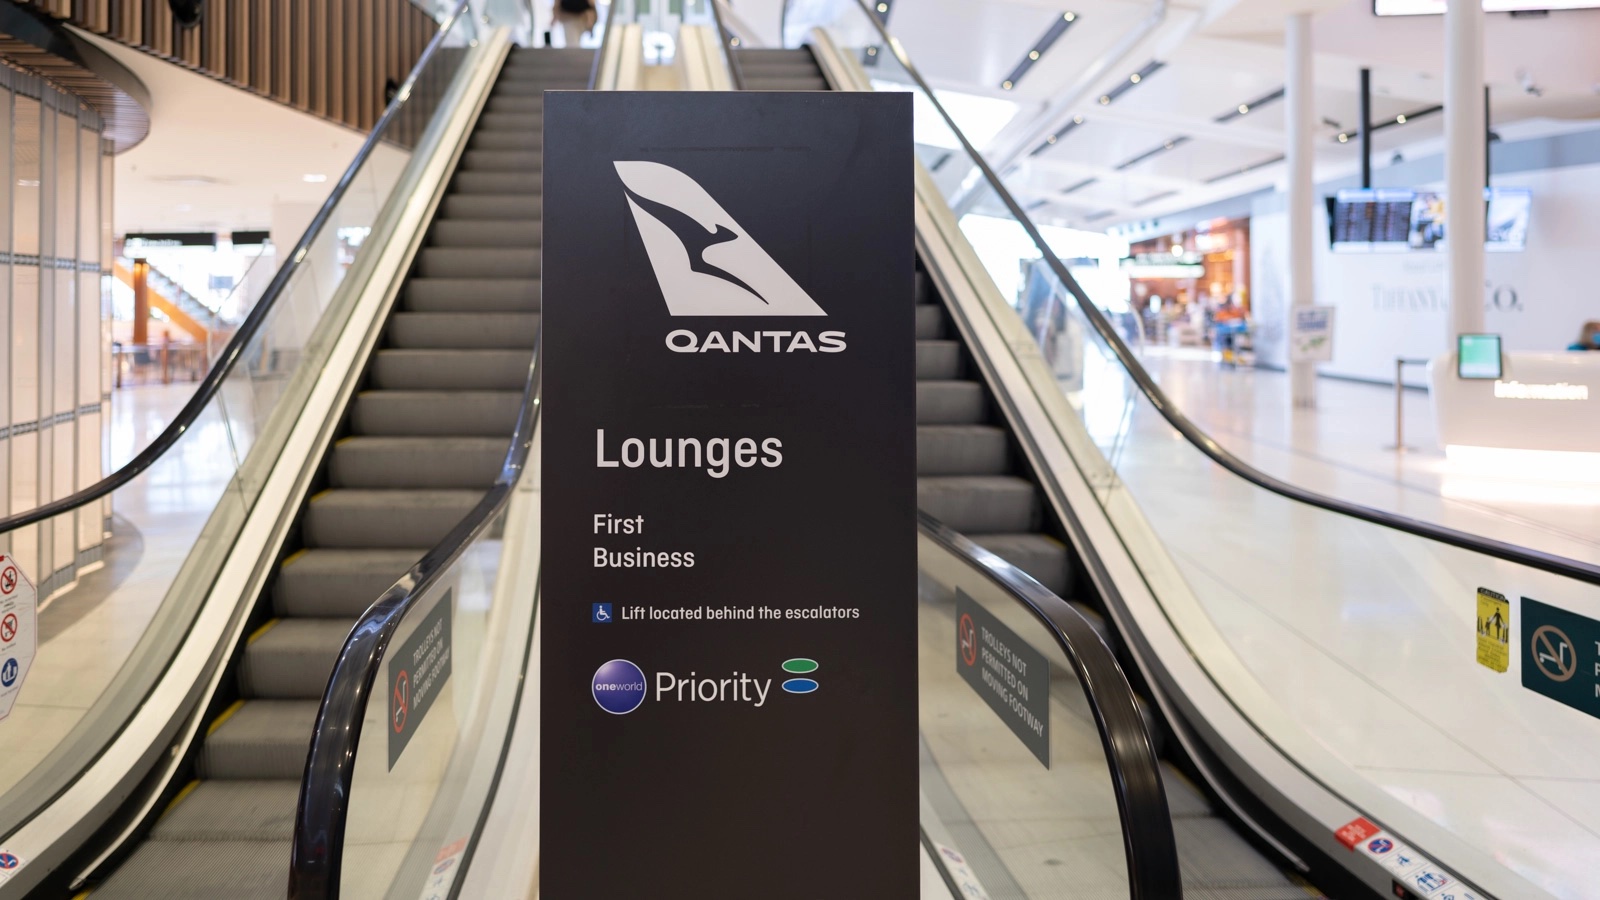 Qantas Sydney International Business Class Lounge Sign Elevator Point Hacks